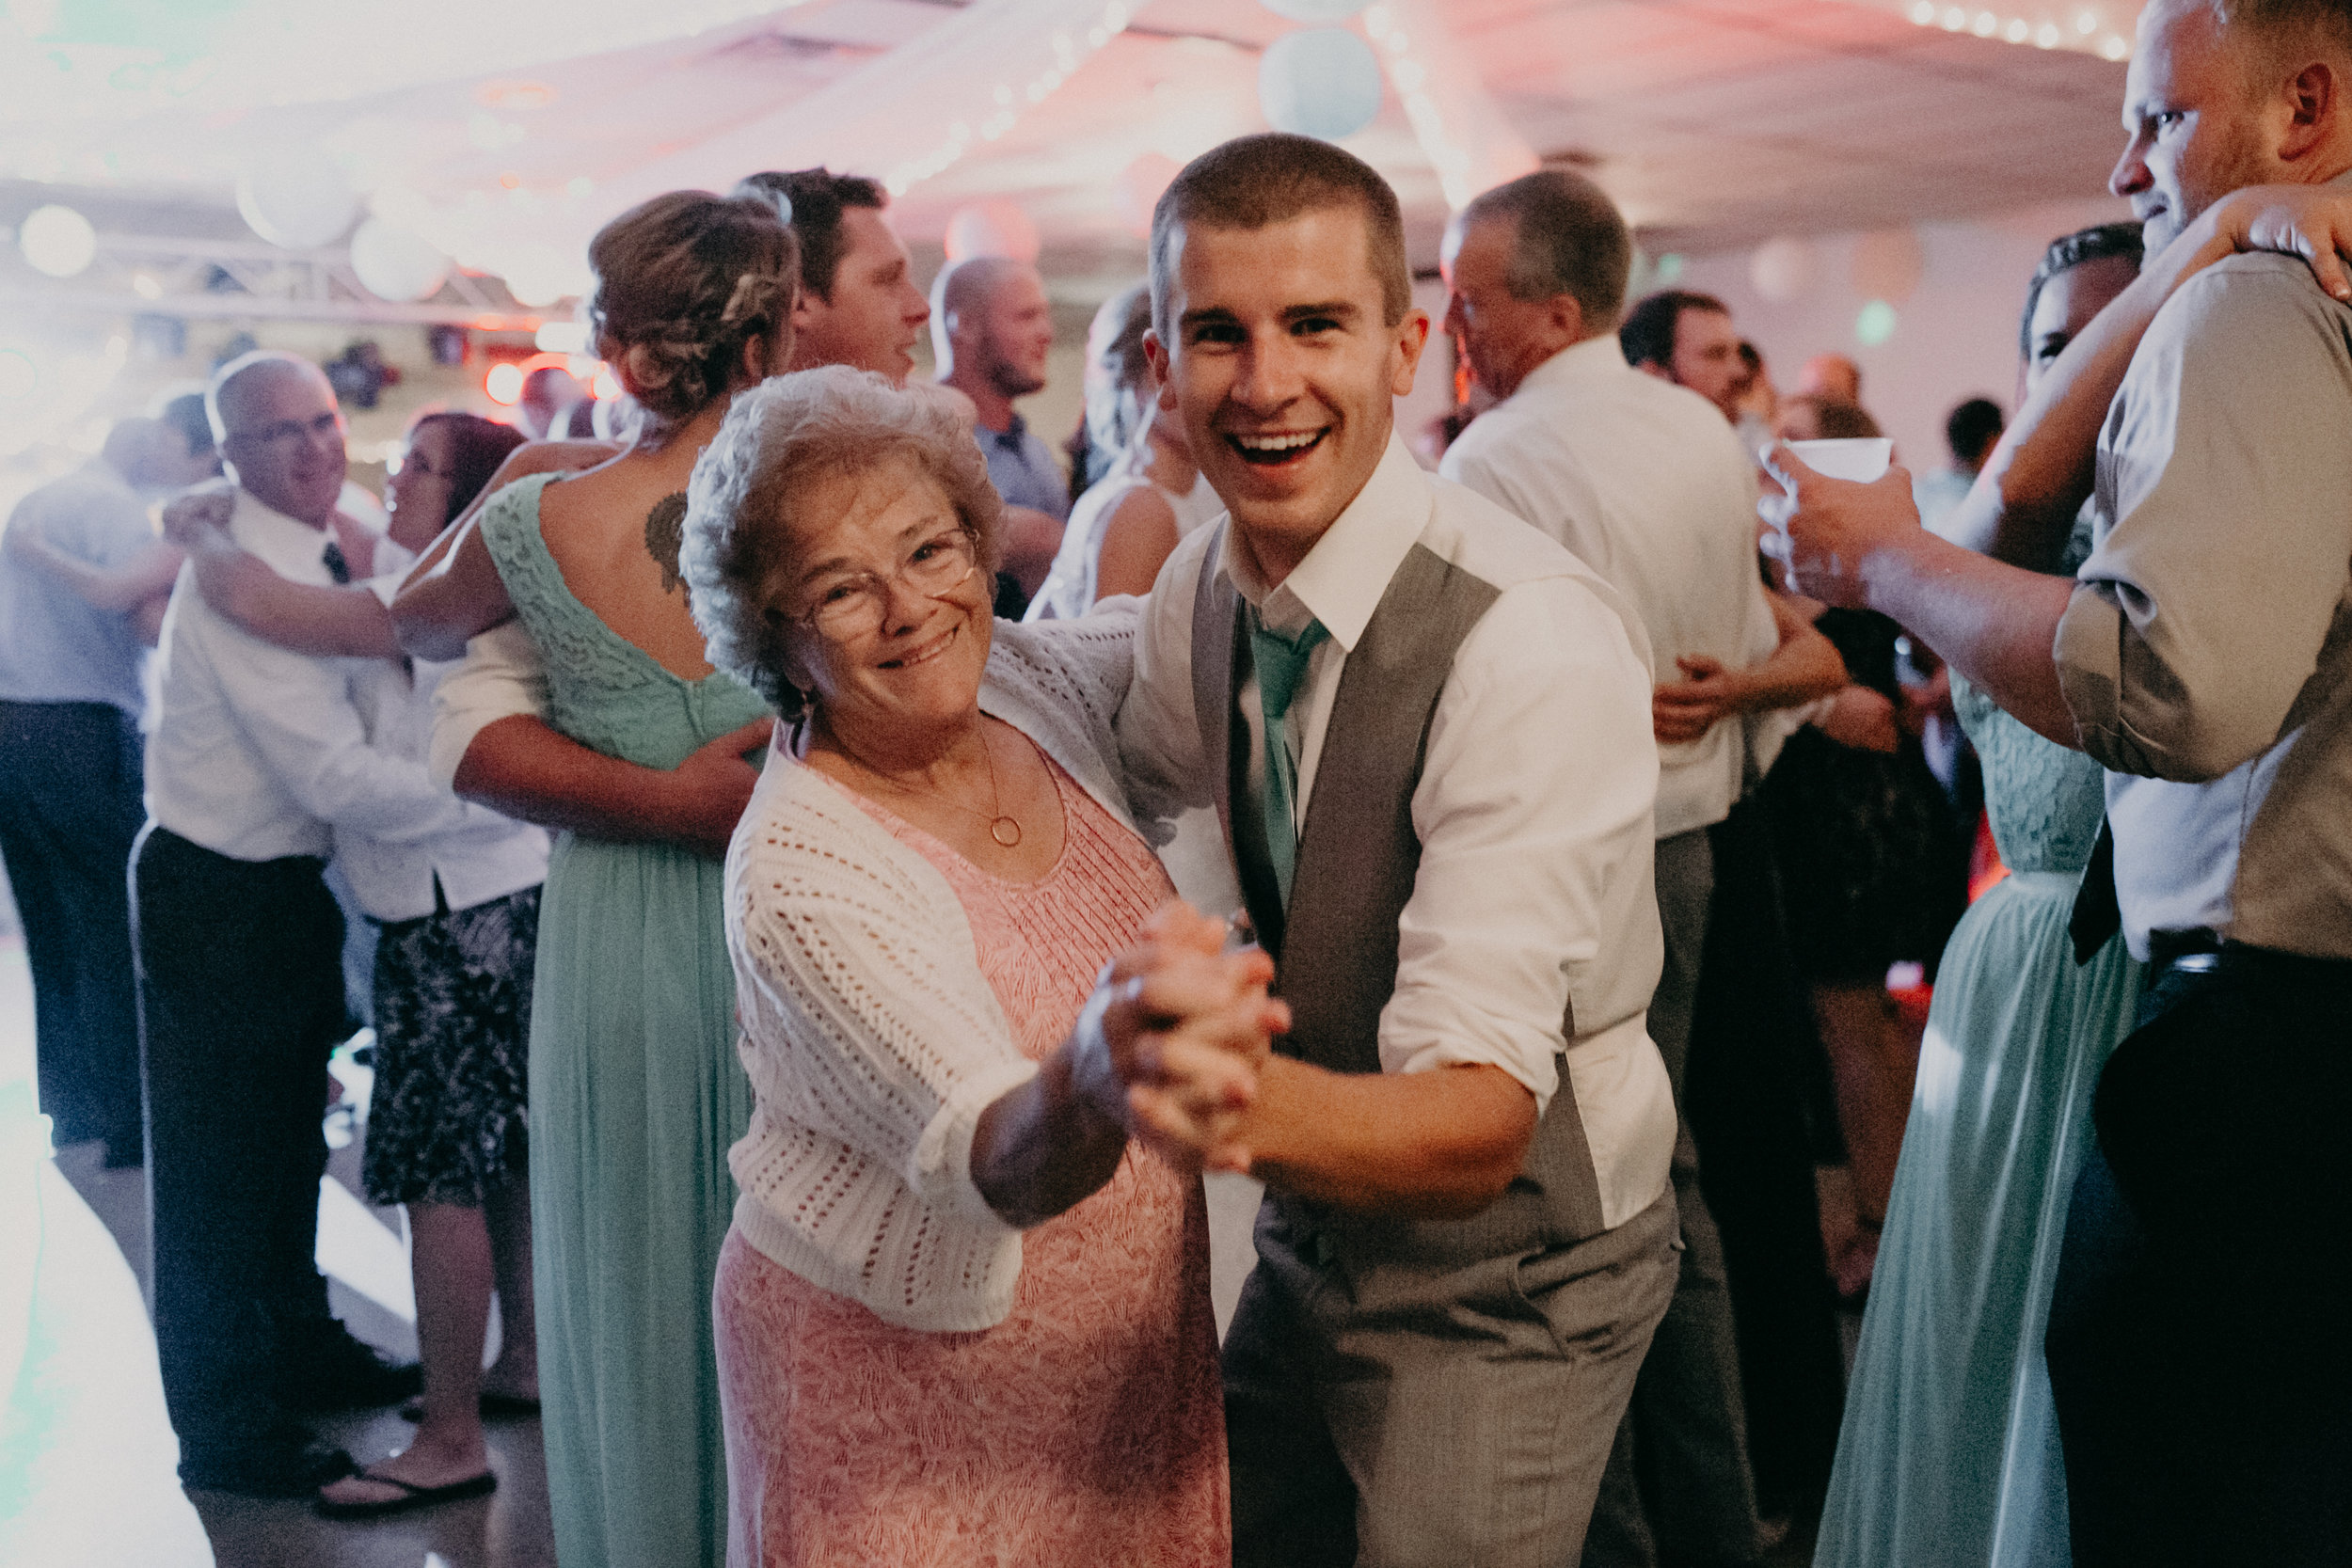  Travis Stargardt dances with family at wedding reception 